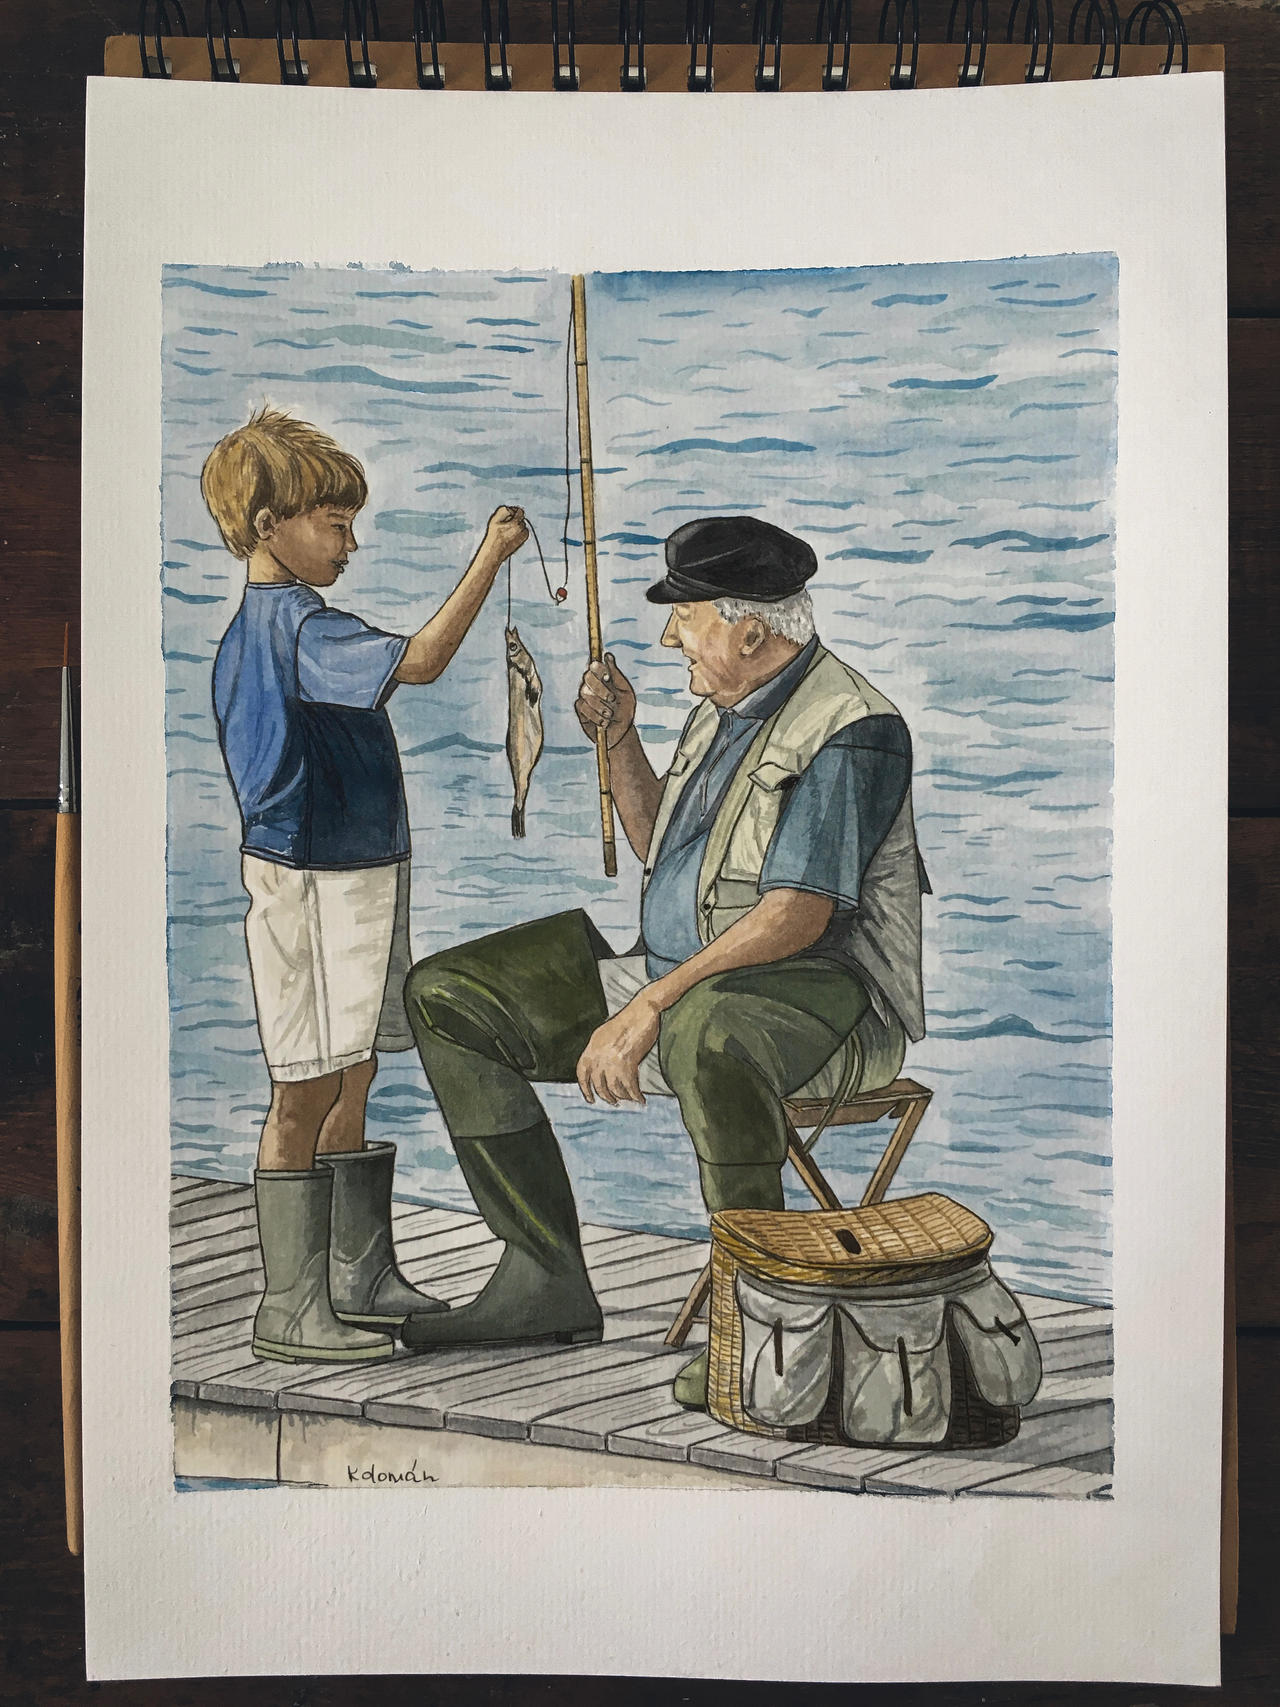 Fishing with grandpa by katelok on DeviantArt